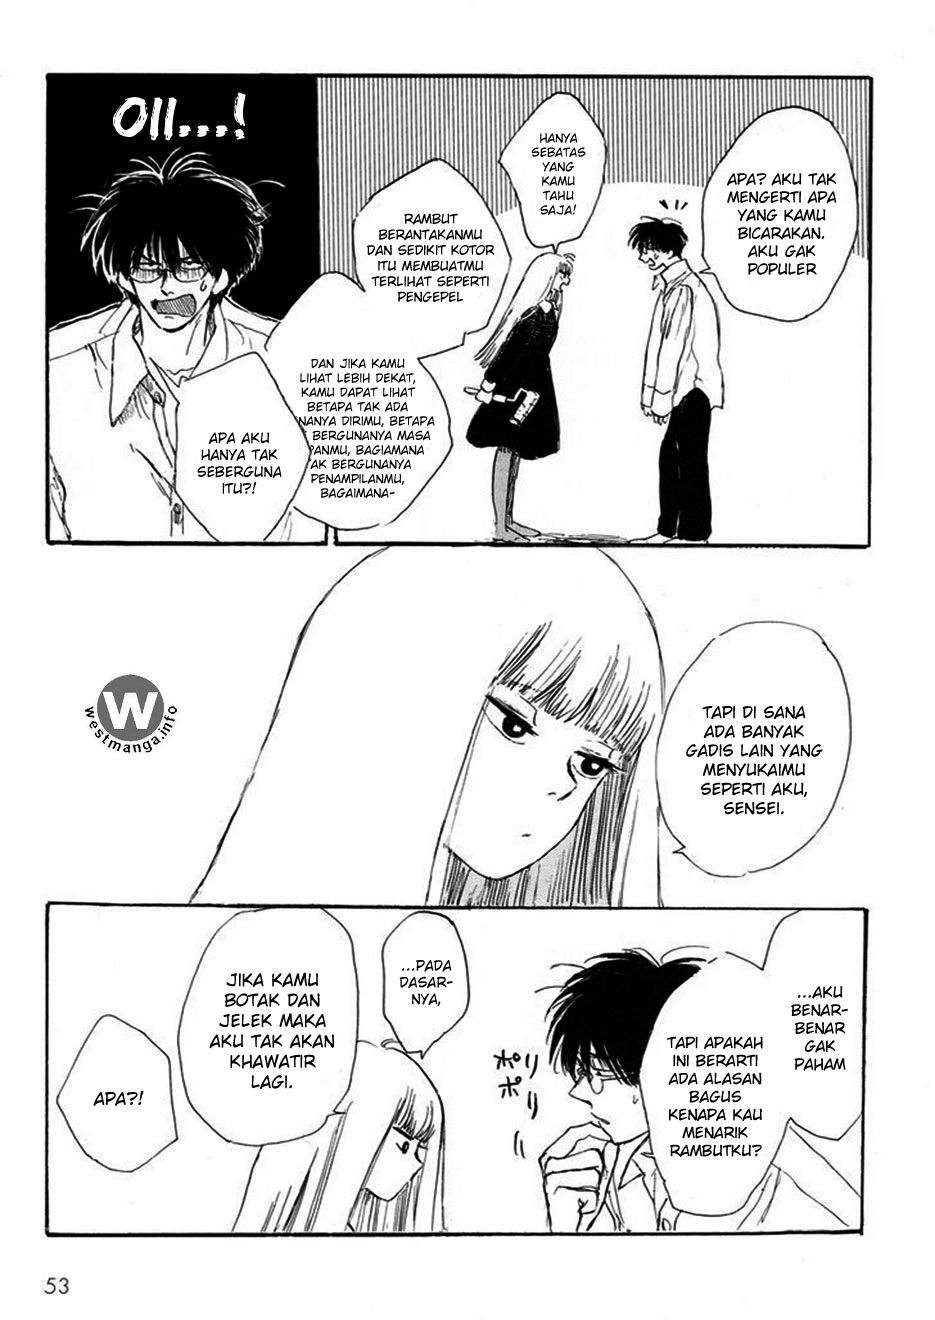 Shiota-sensei to Amai-chan Chapter 03